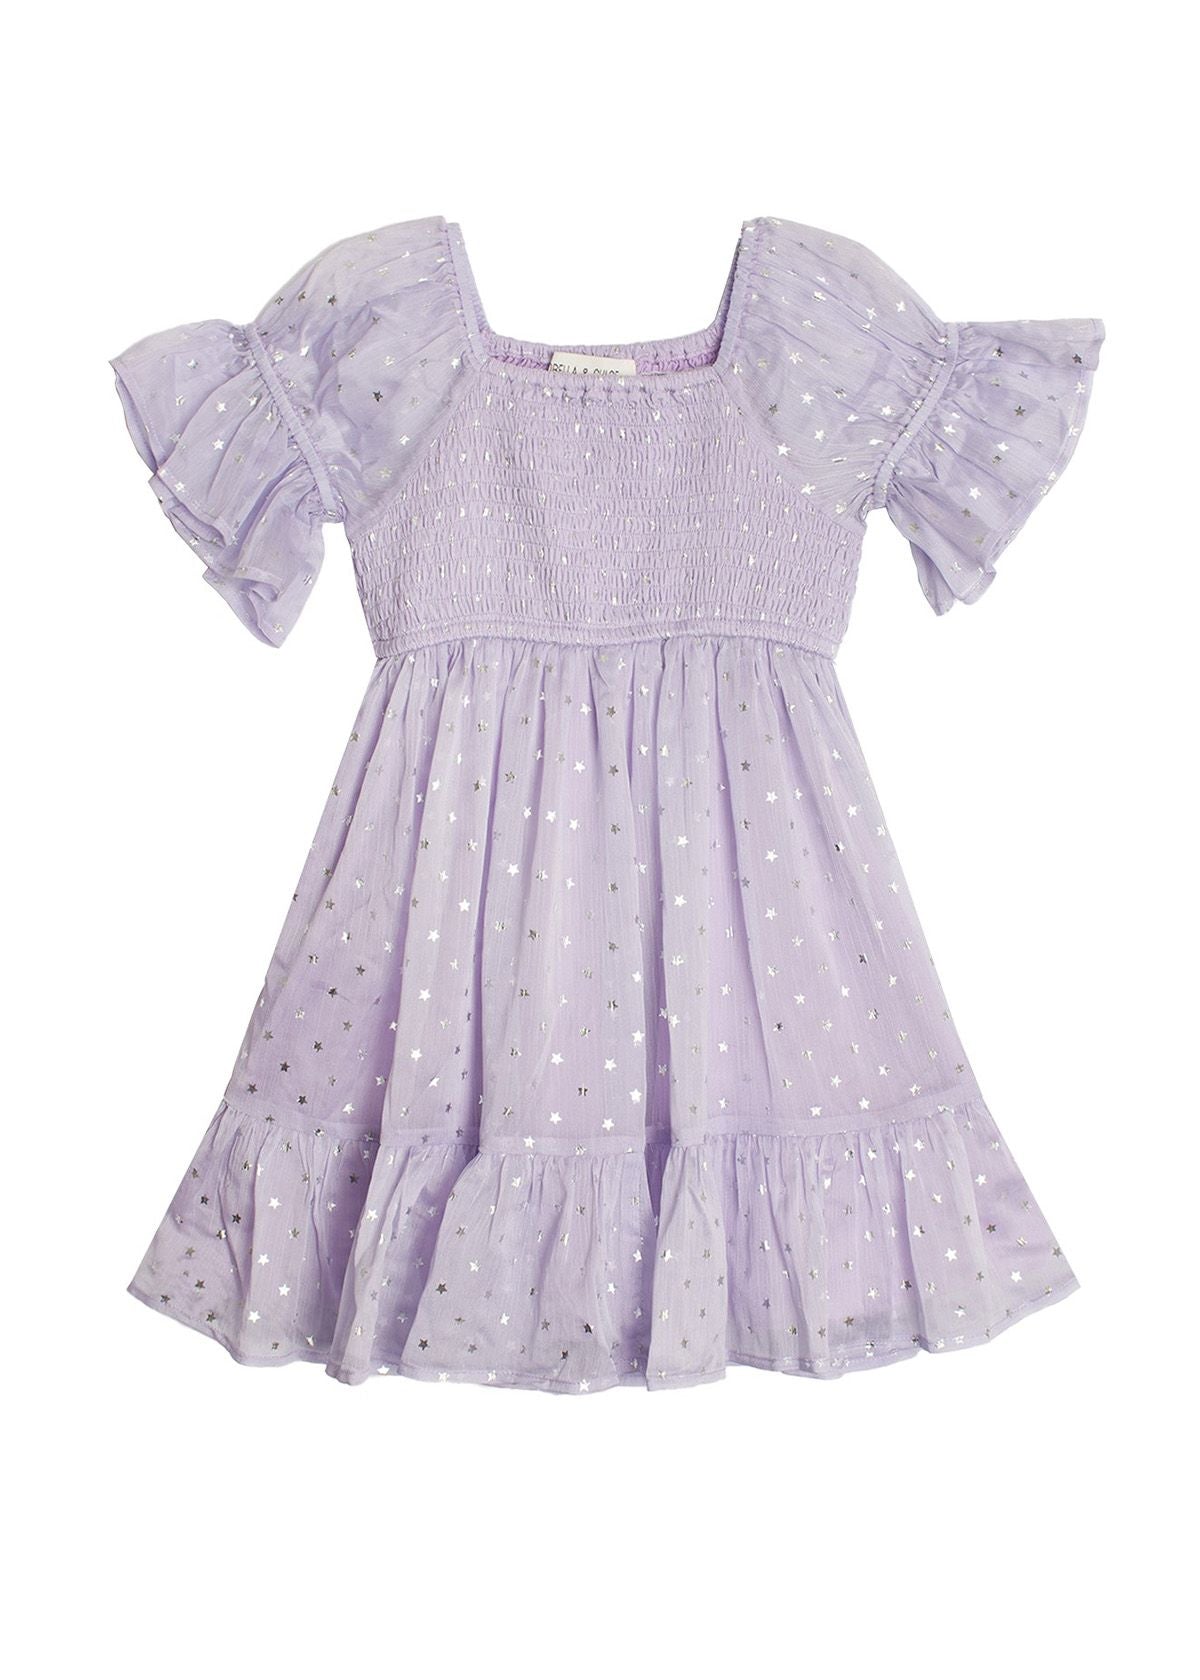 Isobella & Chloe - Lavender Dreams Dress